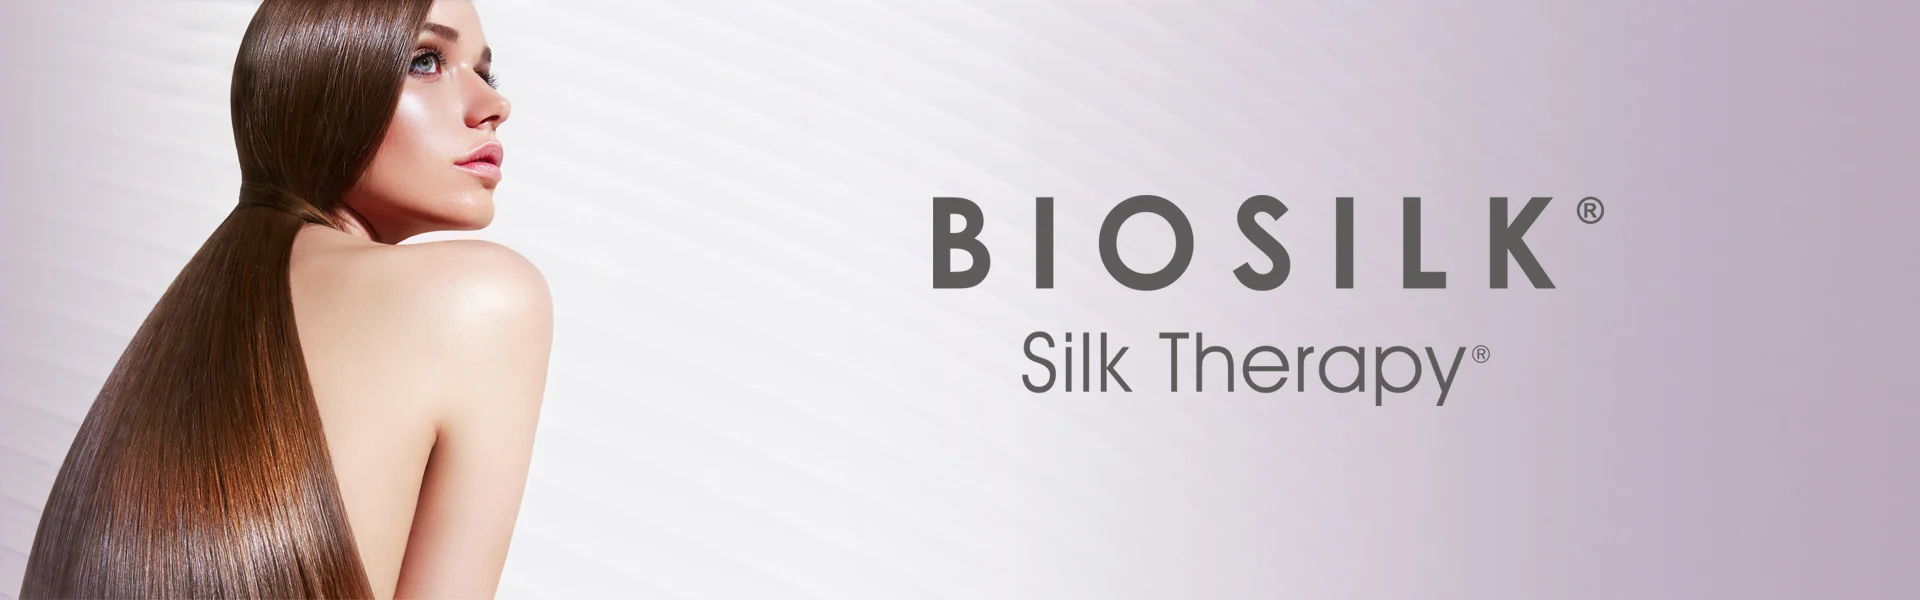 Biosilk-banner